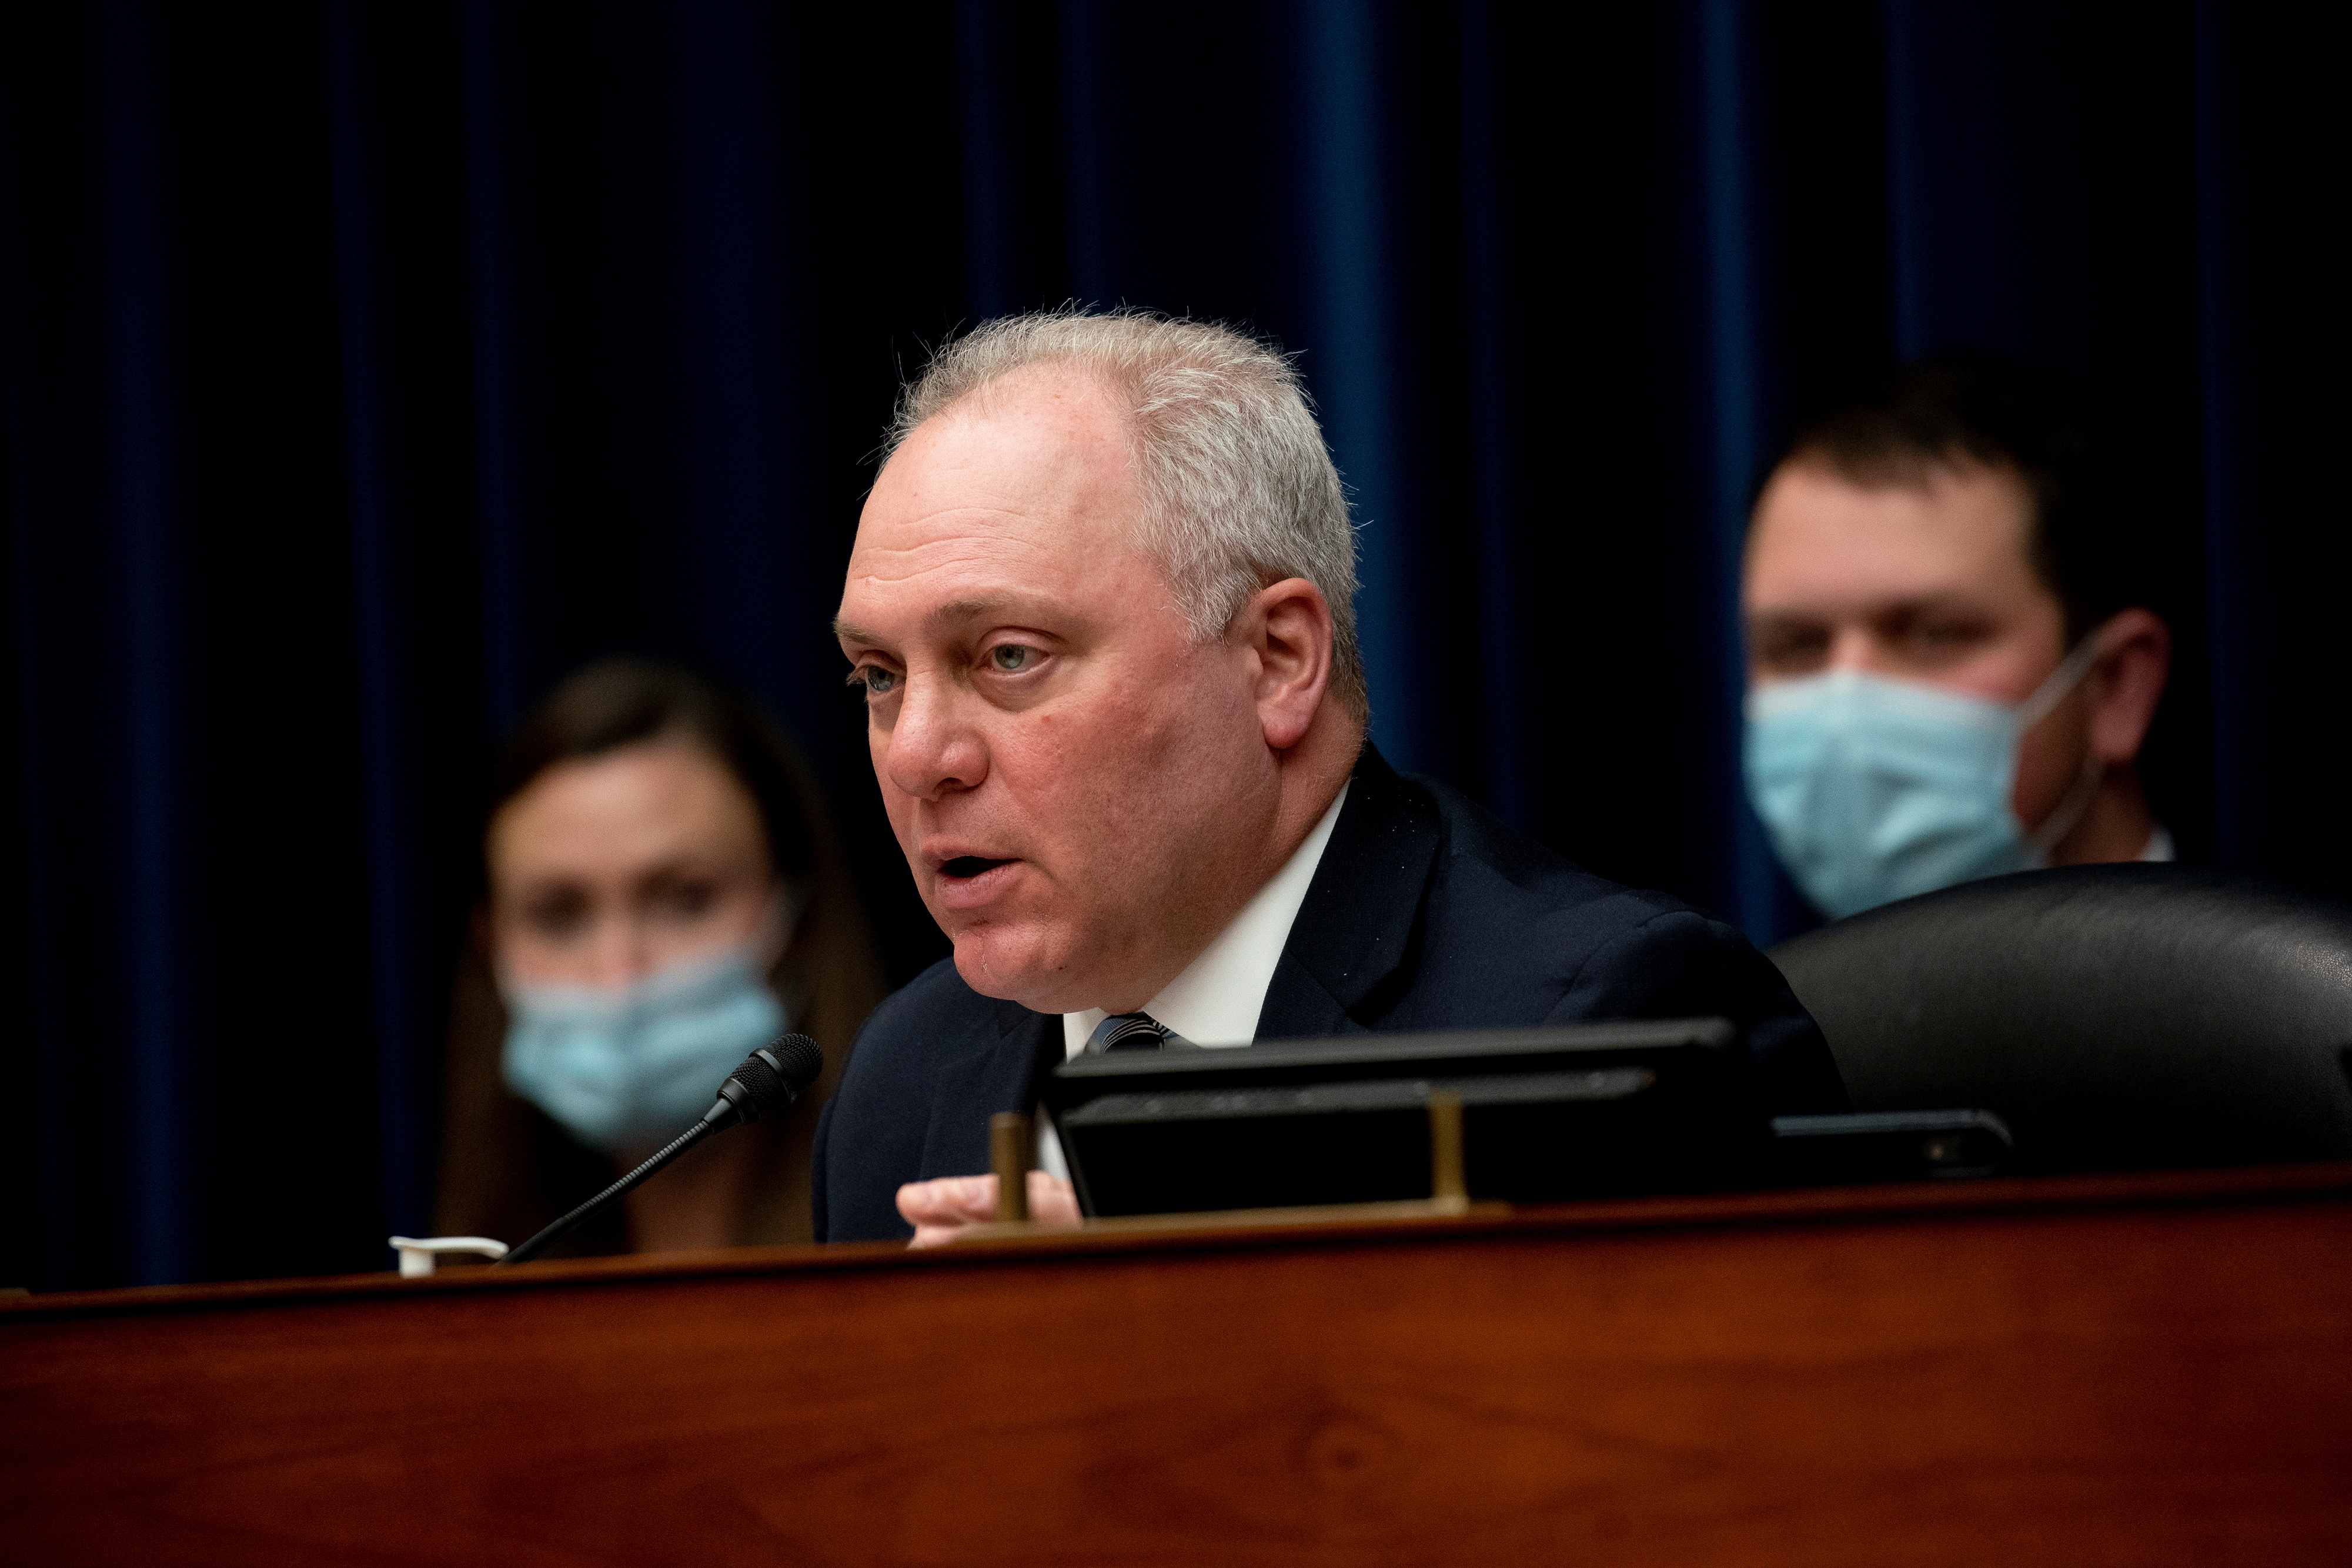 House Select Subcommittee on the Coronavirus Crisis hearing on Capitol Hill in Washington